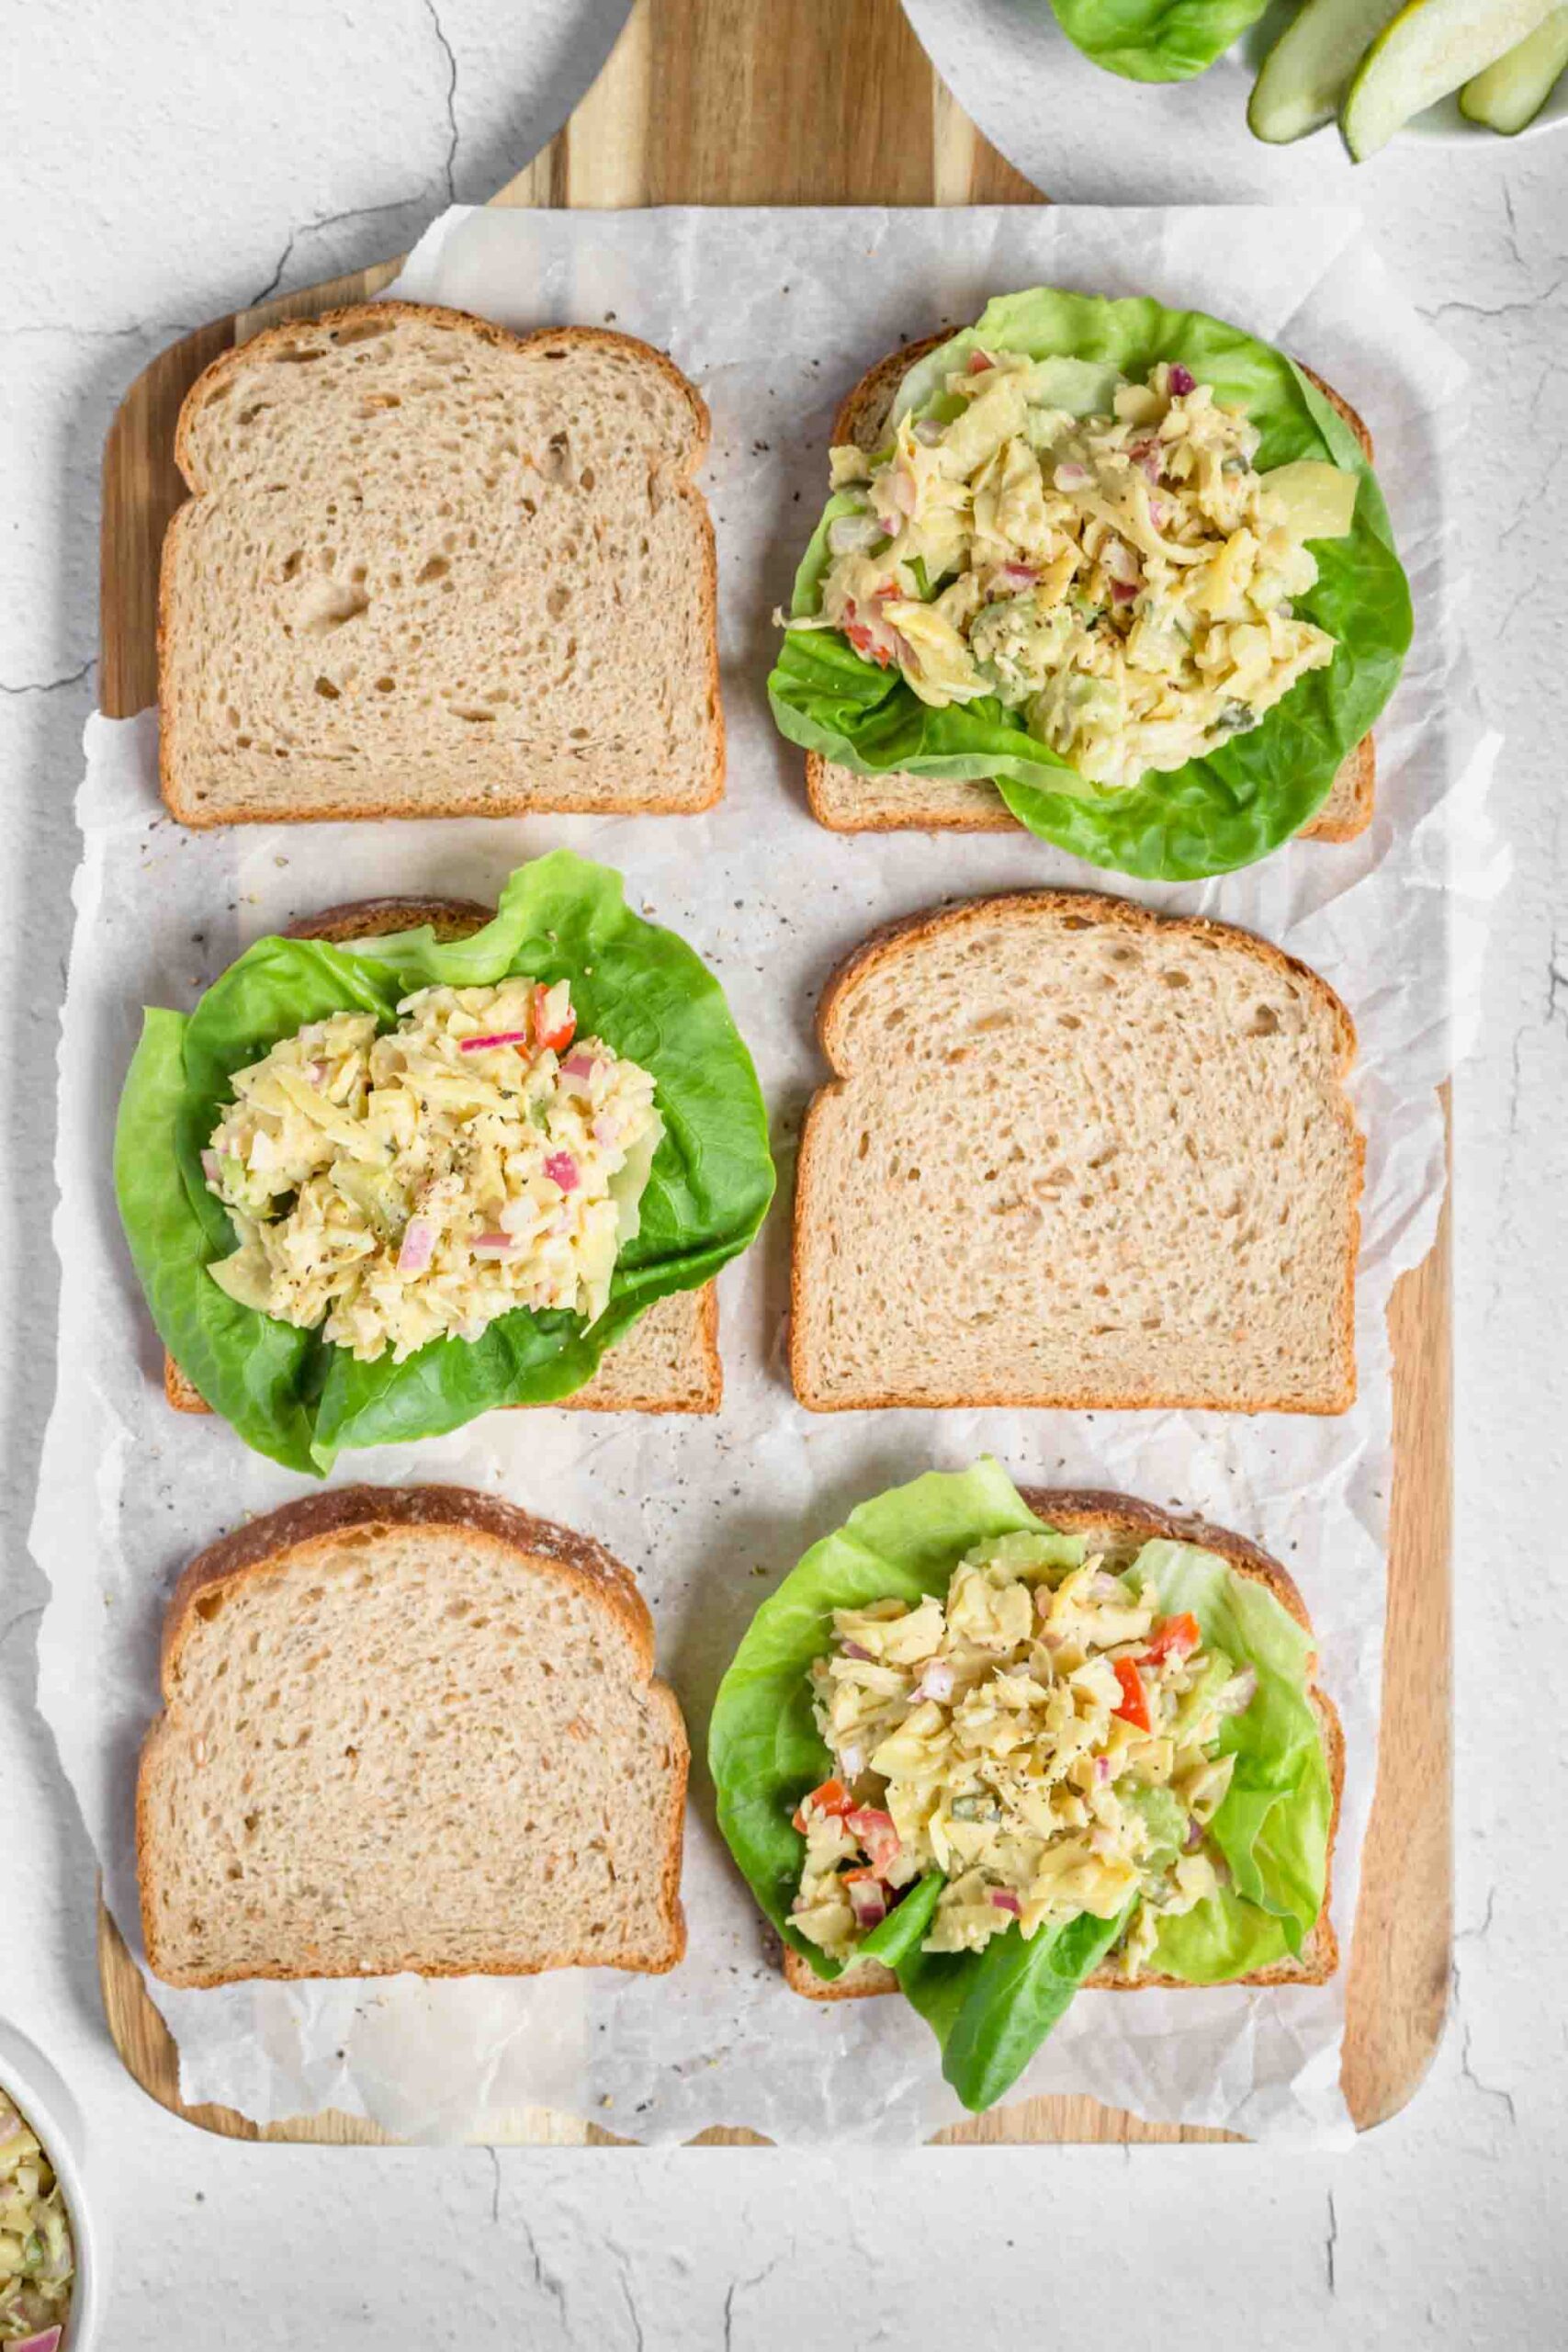 Making the perfect vegan tuna salad sandwich on whole grain bread